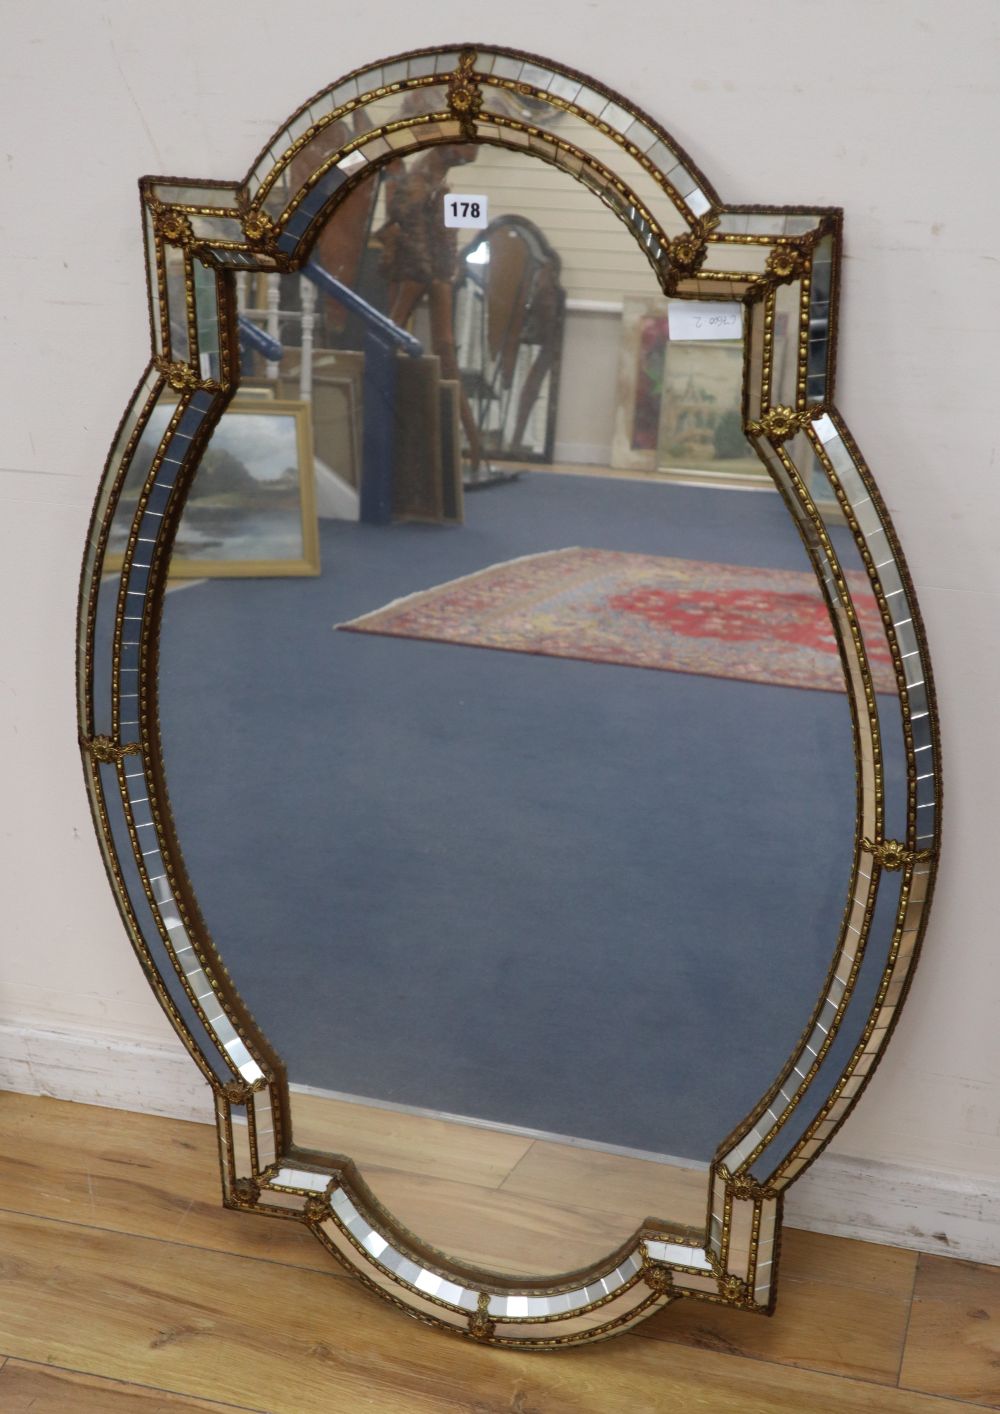 A Venetian style wall mirror, width 72cm height 110cm